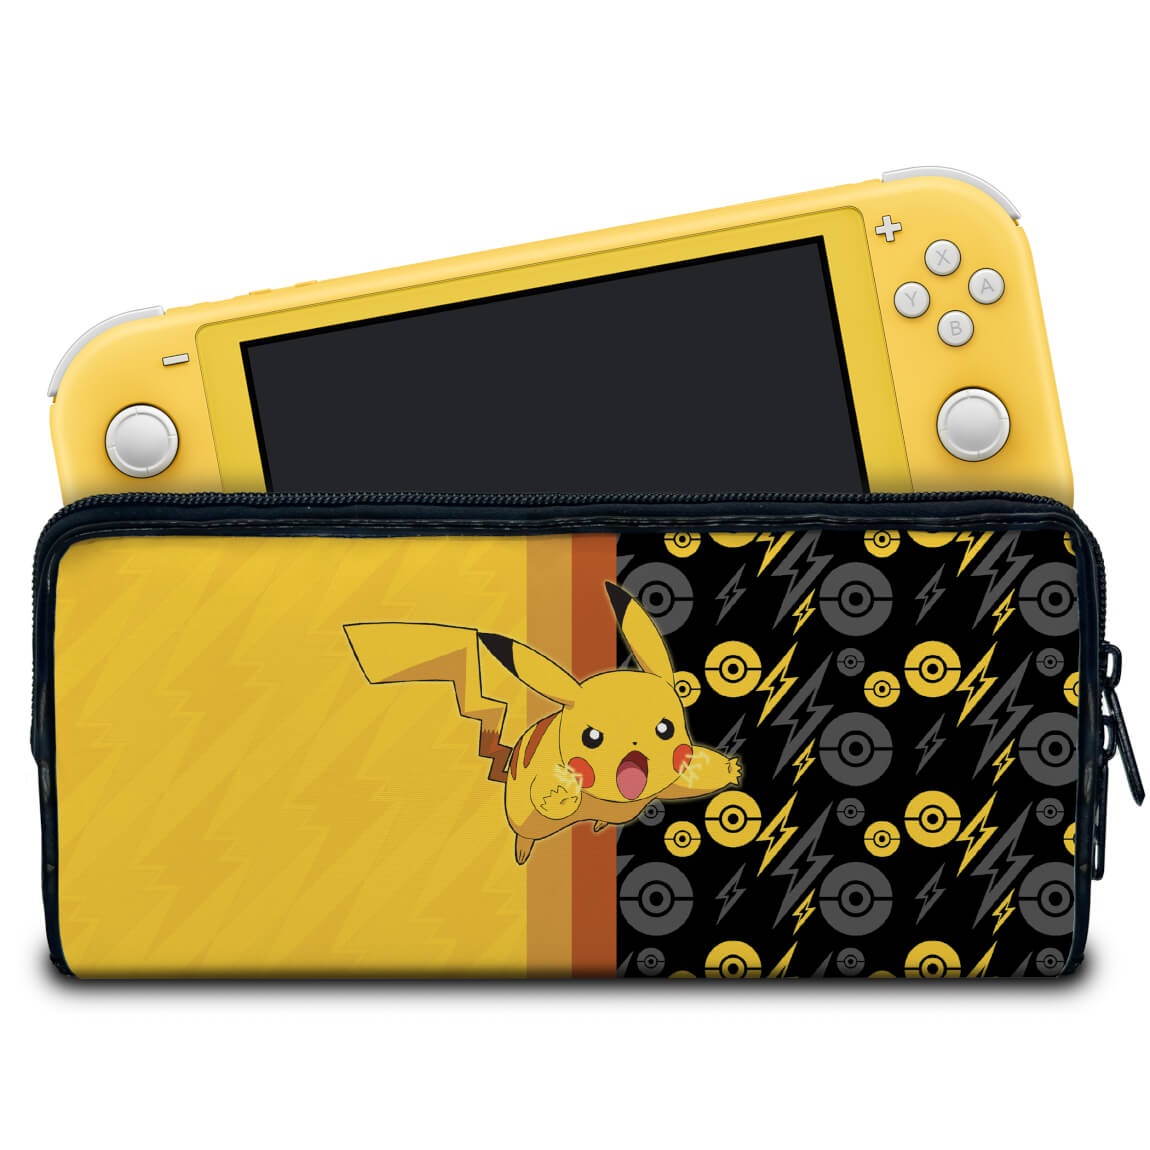 KIT Xbox One X Skin e Capa Anti Poeira - Pokemon Pikachu - Pop Arte Skins